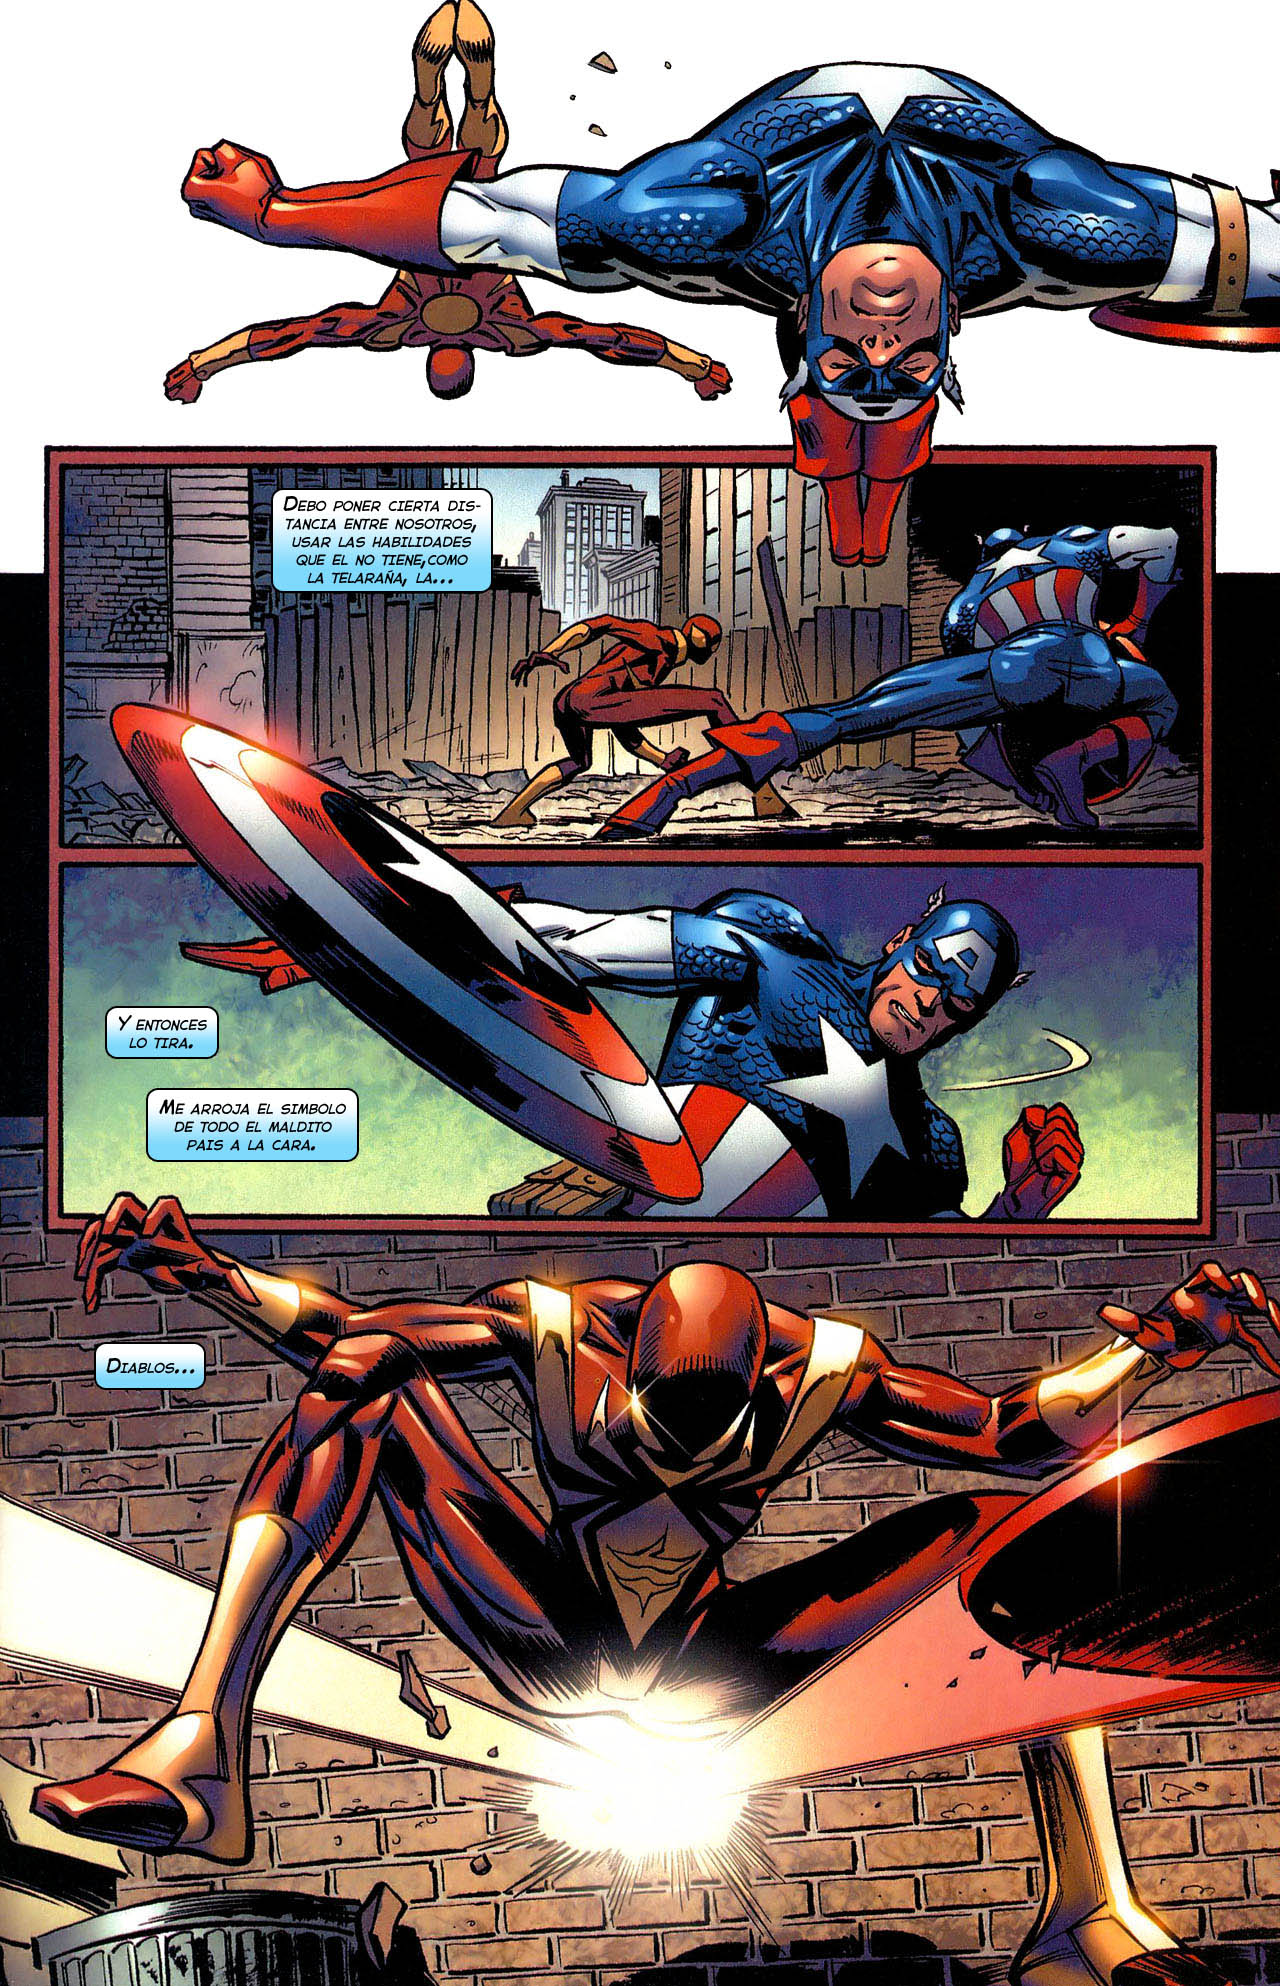 Amazing Spiderman Vs Deadpool Pictures & Backgrounds